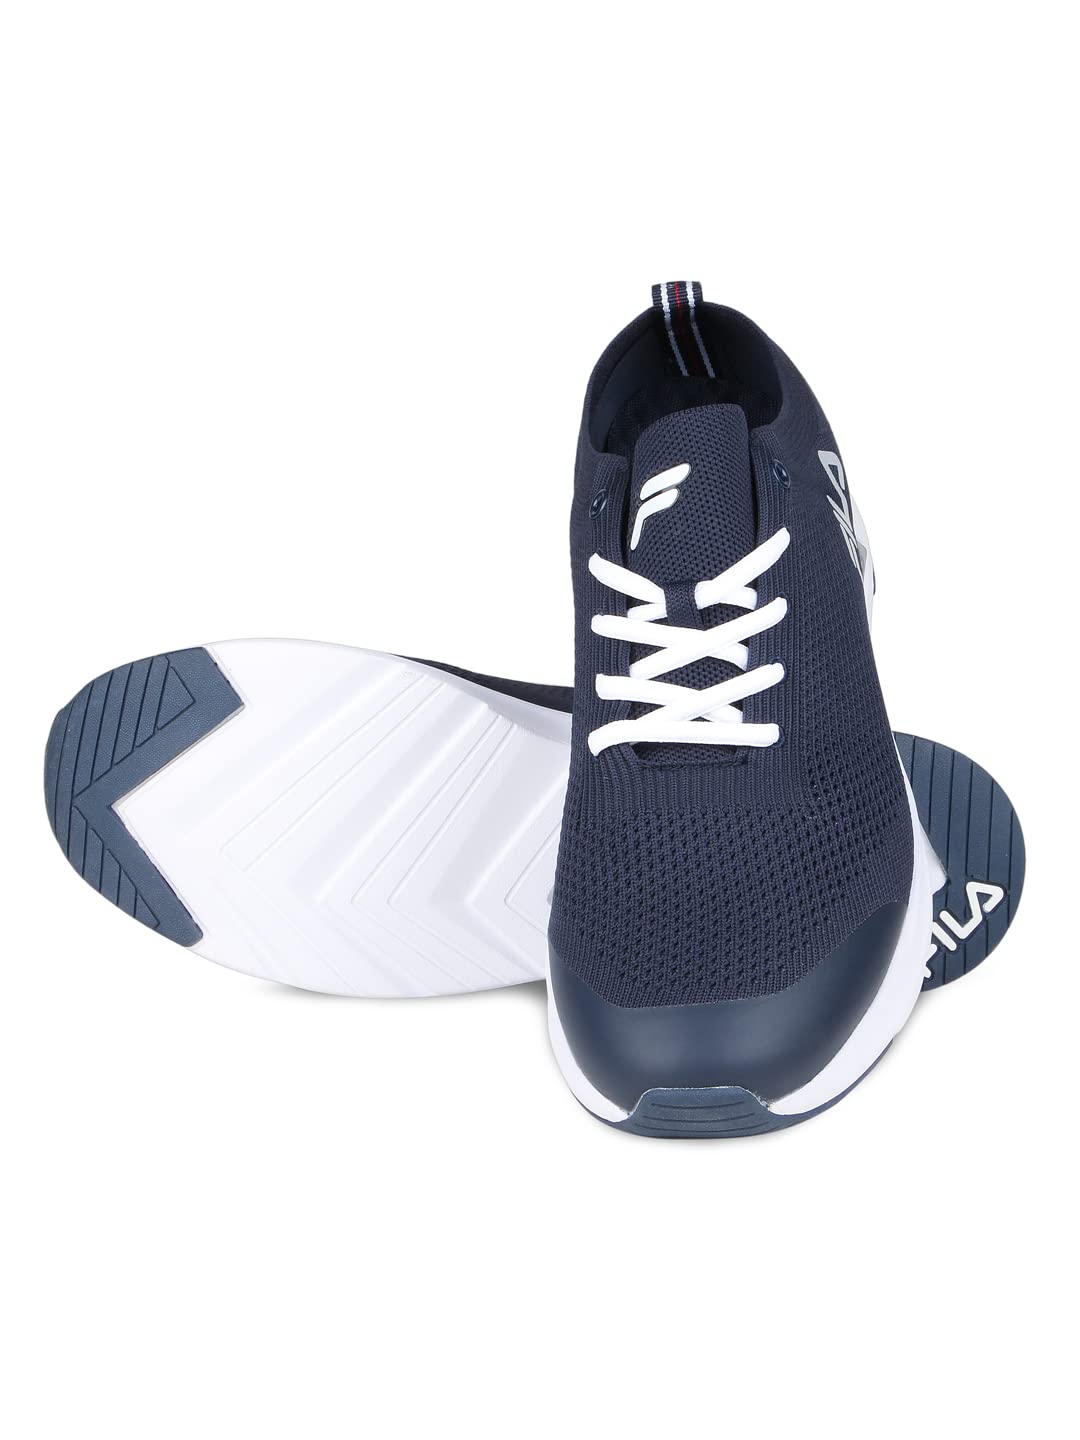 Fila Men's Zubro Pea/Wht Sneakers-11 UK (45 EU) (12 US) (11006881) 